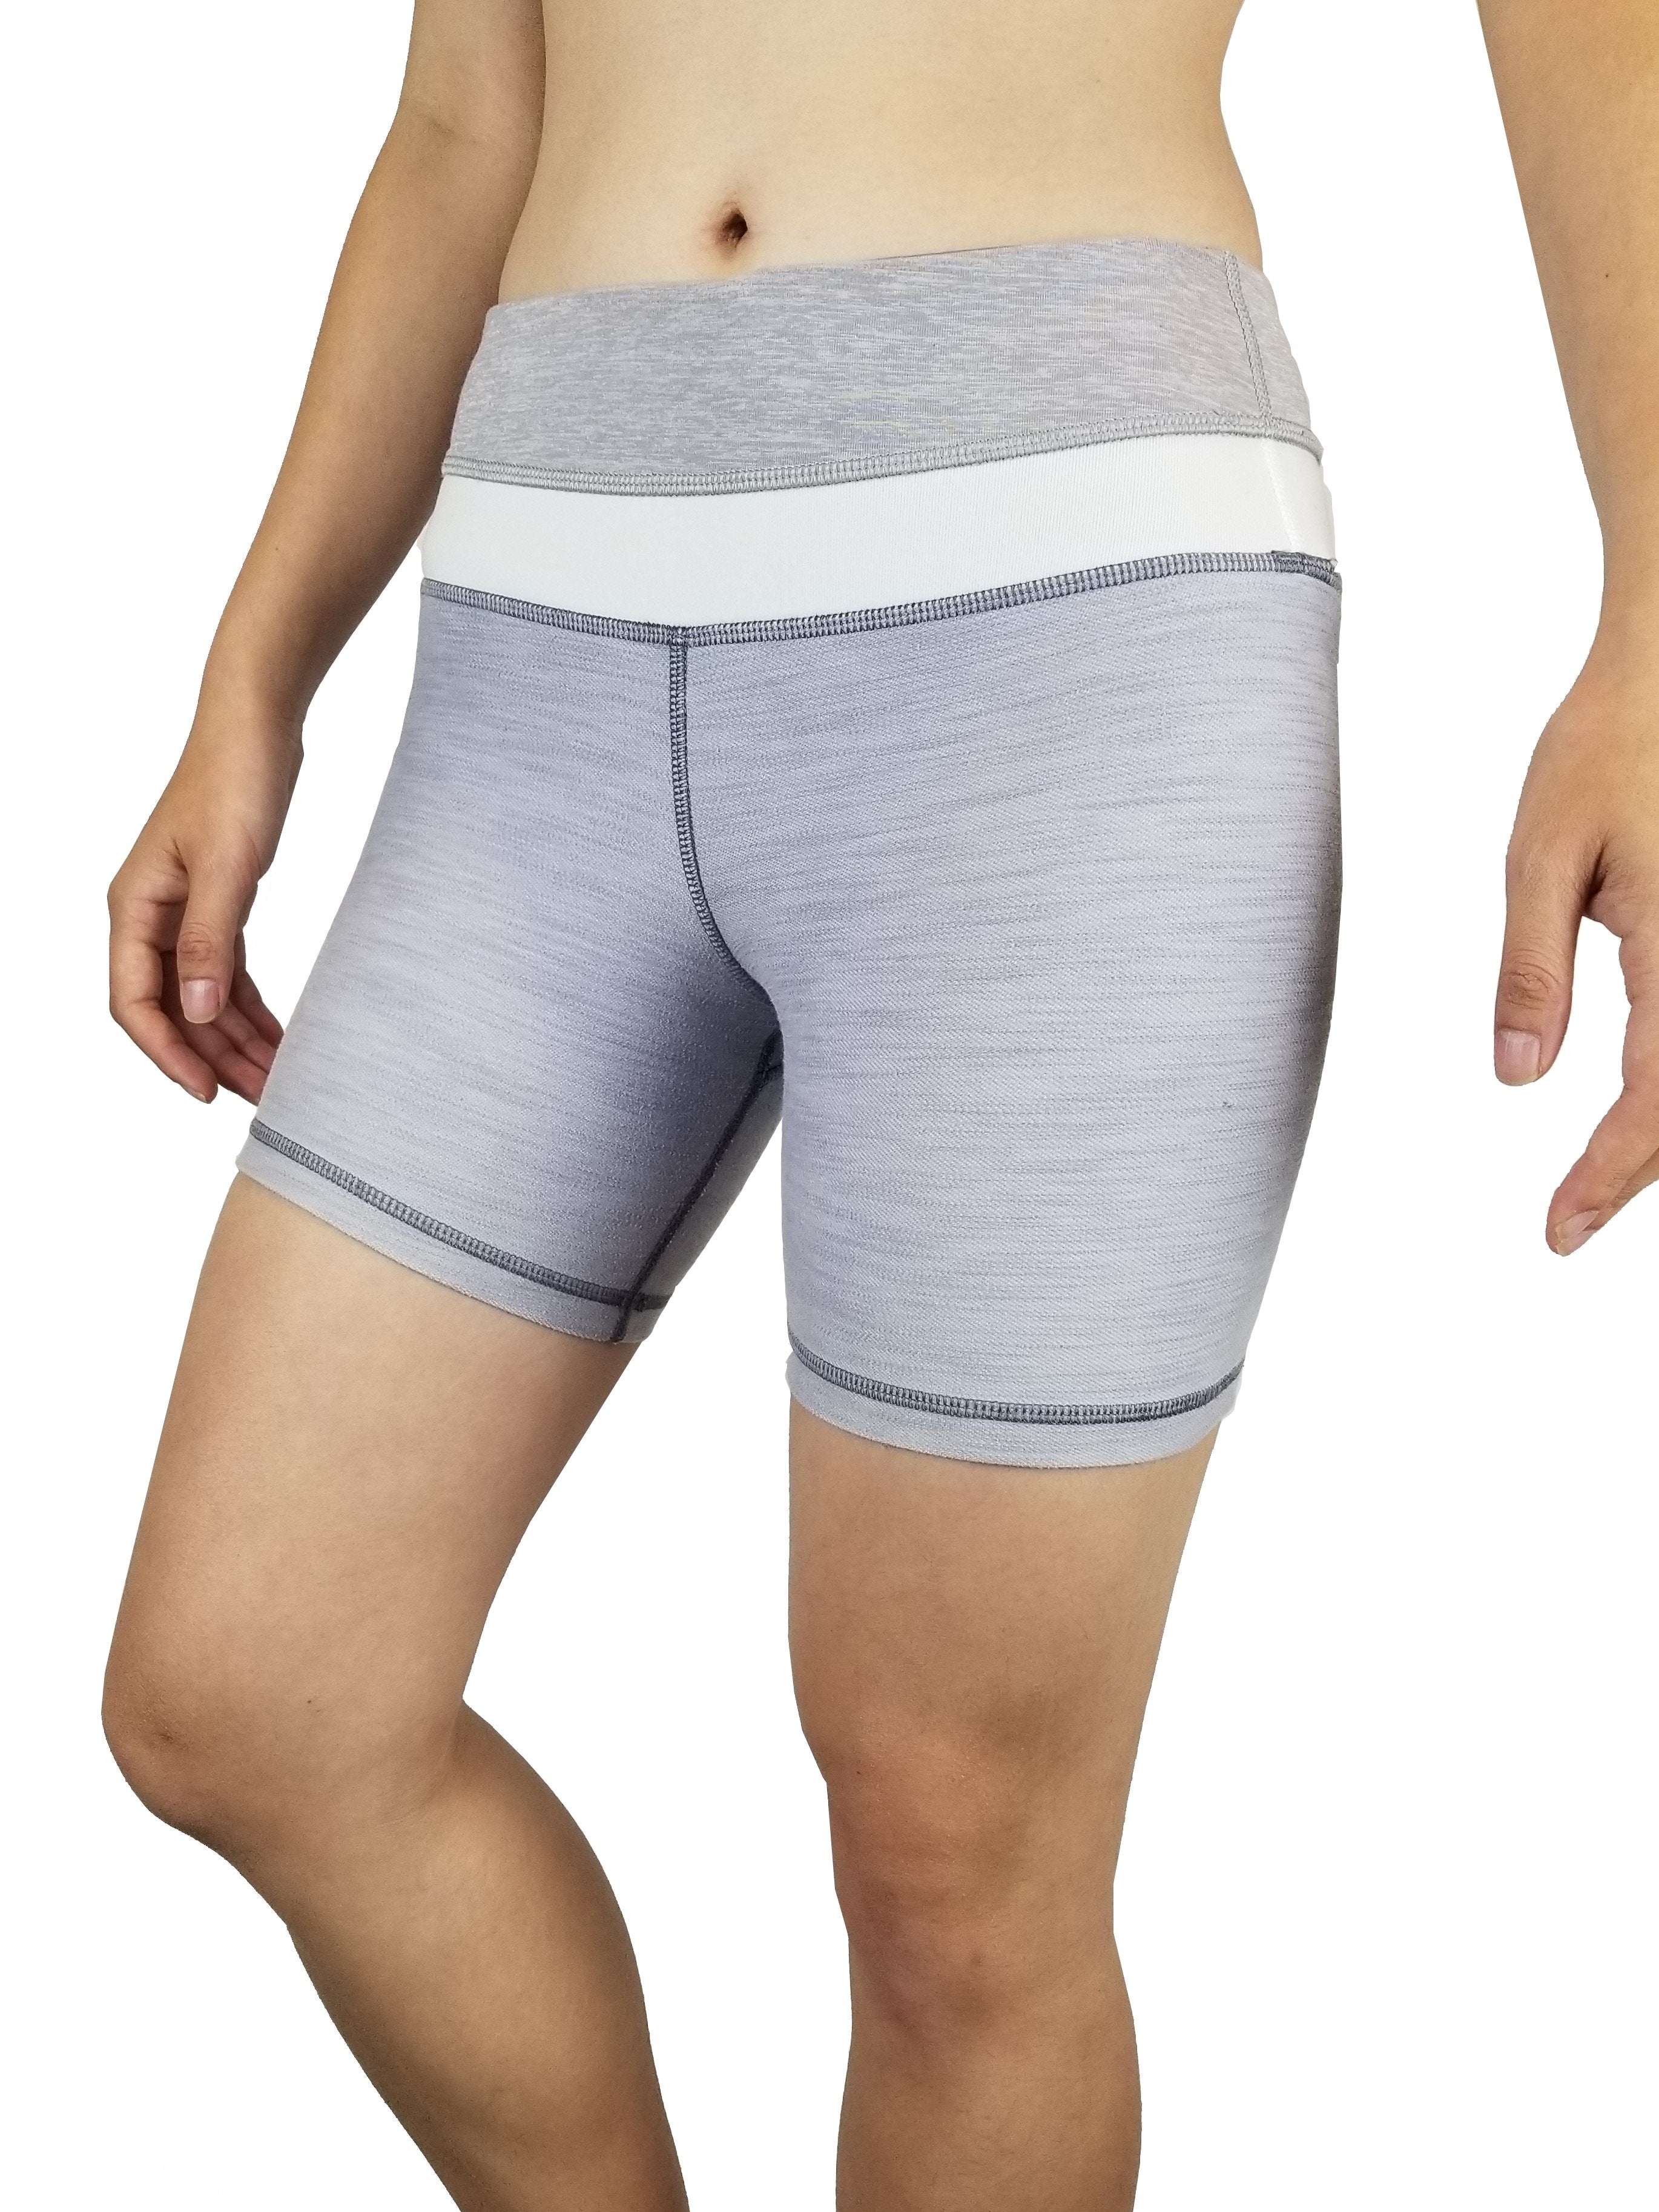 lululemon leggings size 4 - Athletic apparel